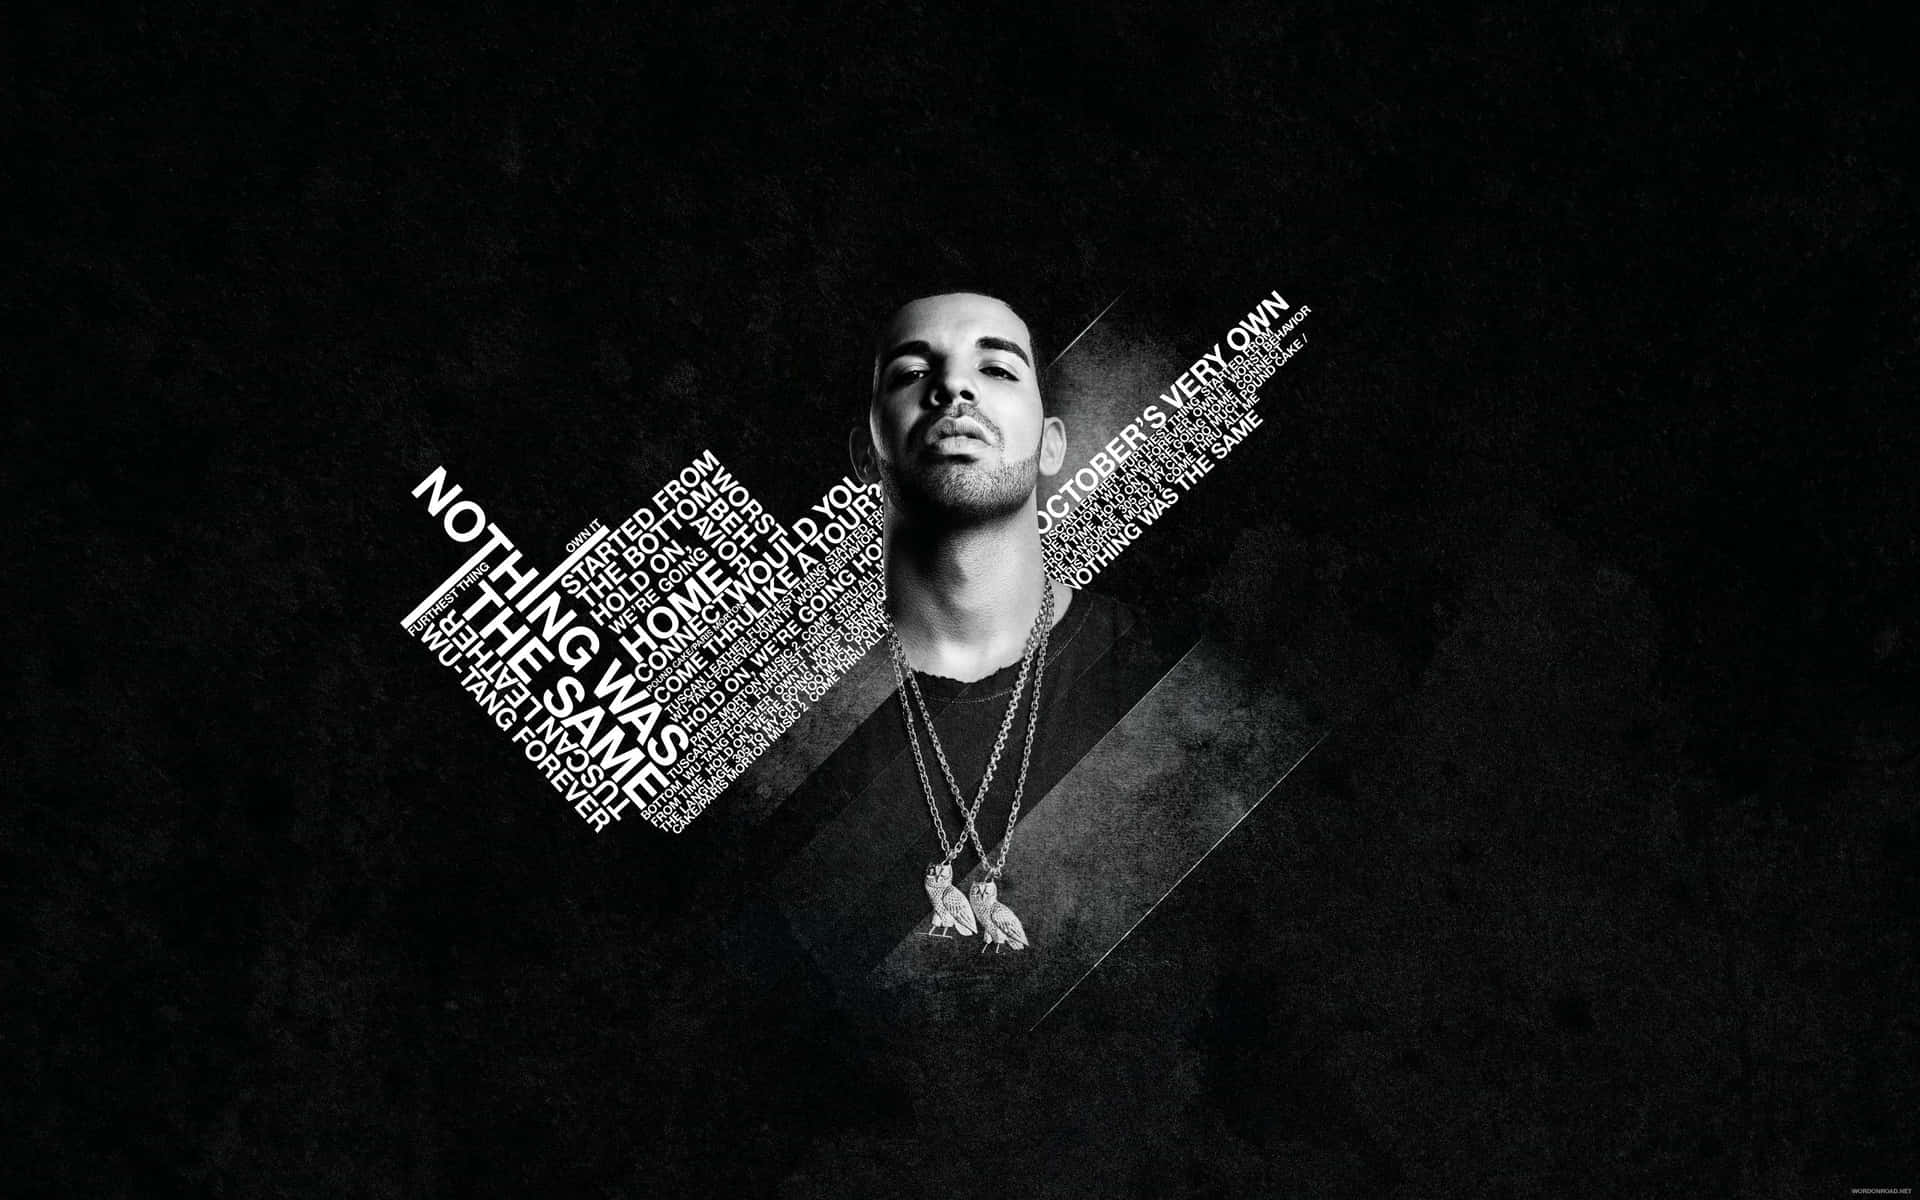 Aesthetic Drake - Music Legend in the Making Wallpaper